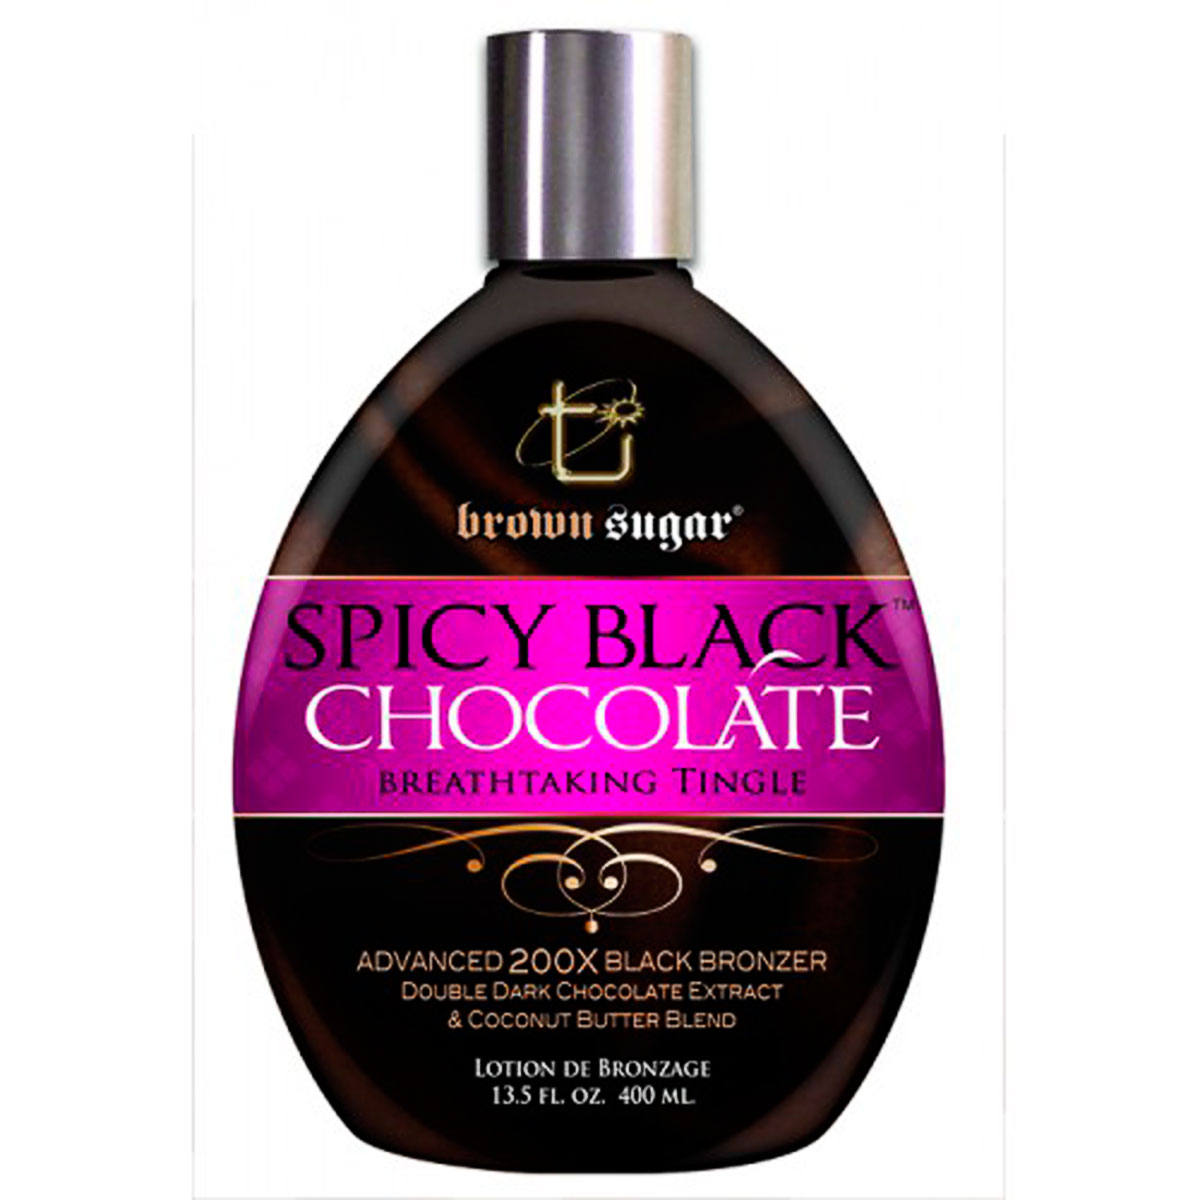 Spicy Black Chocolate 200 Bronzer Tingle